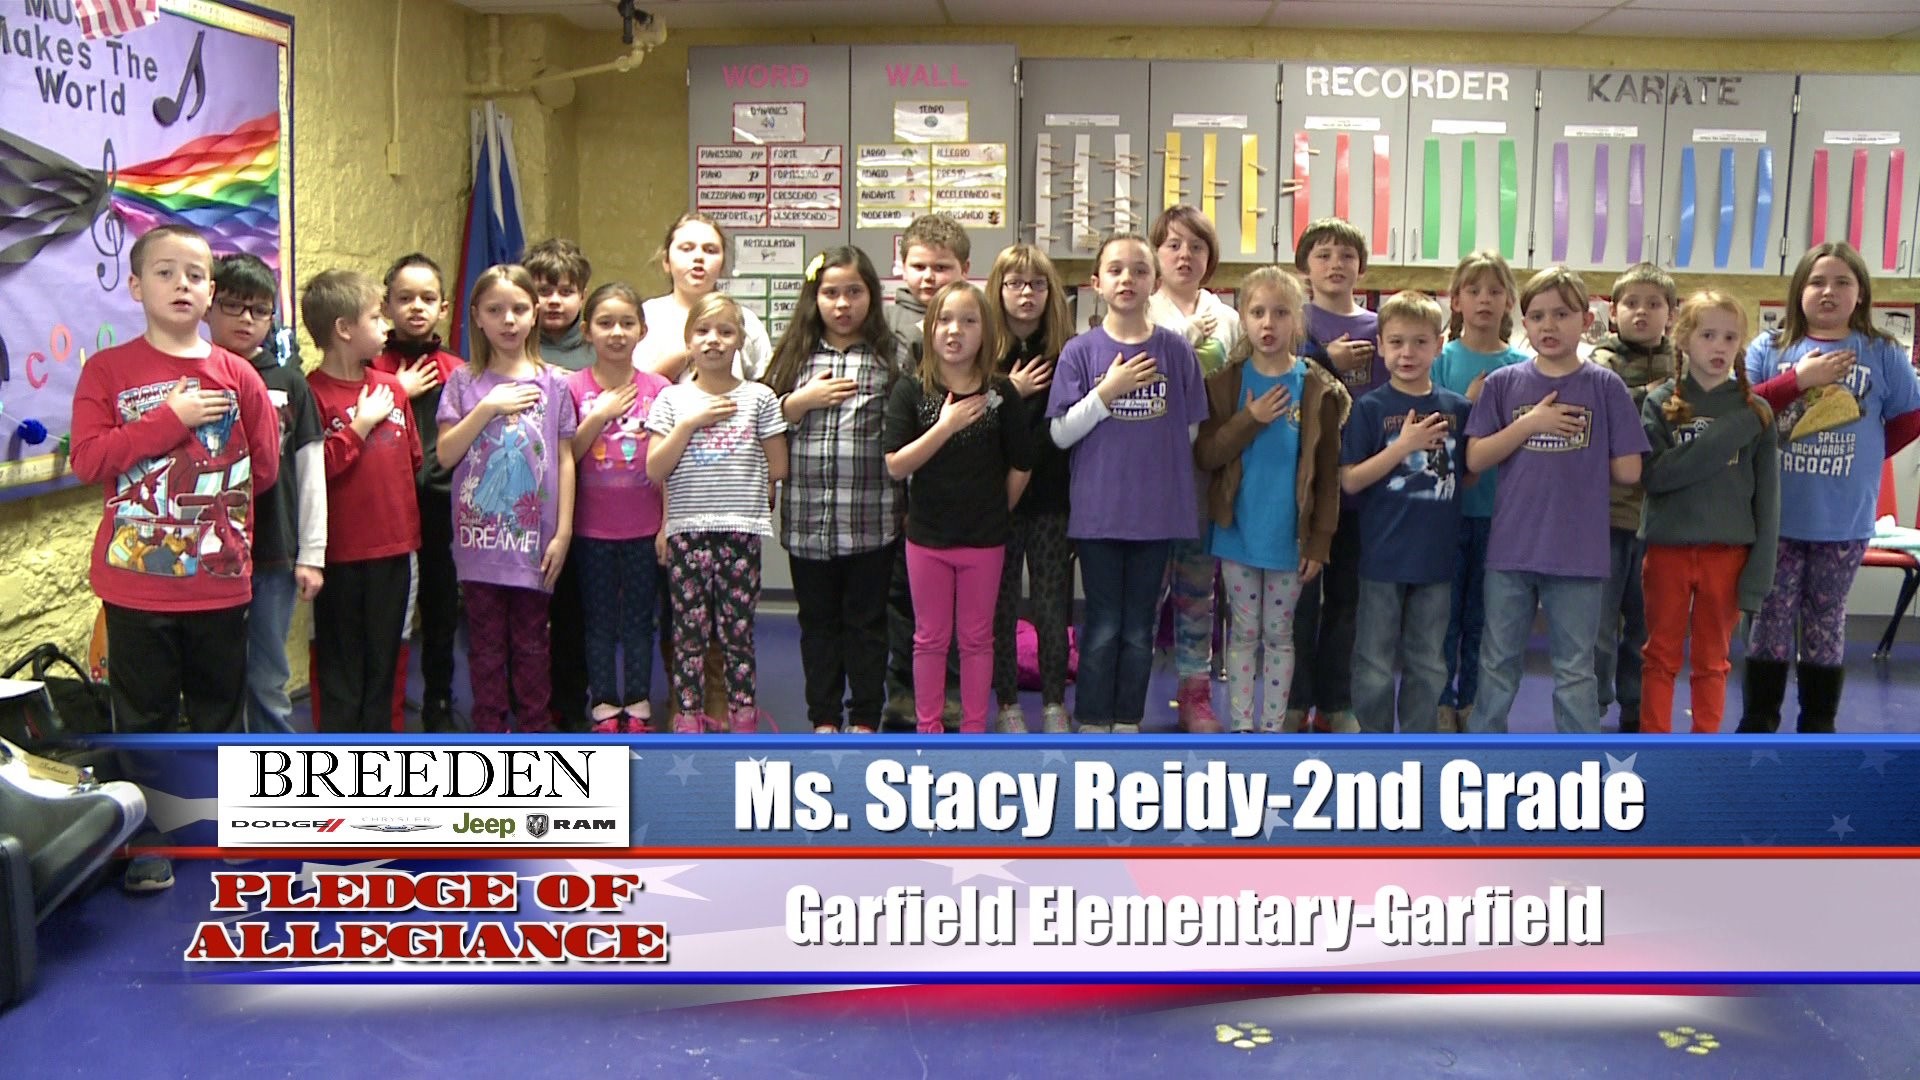 Ms. Stacy Reidy  2nd Grade  Garfield Elementary - Garfield